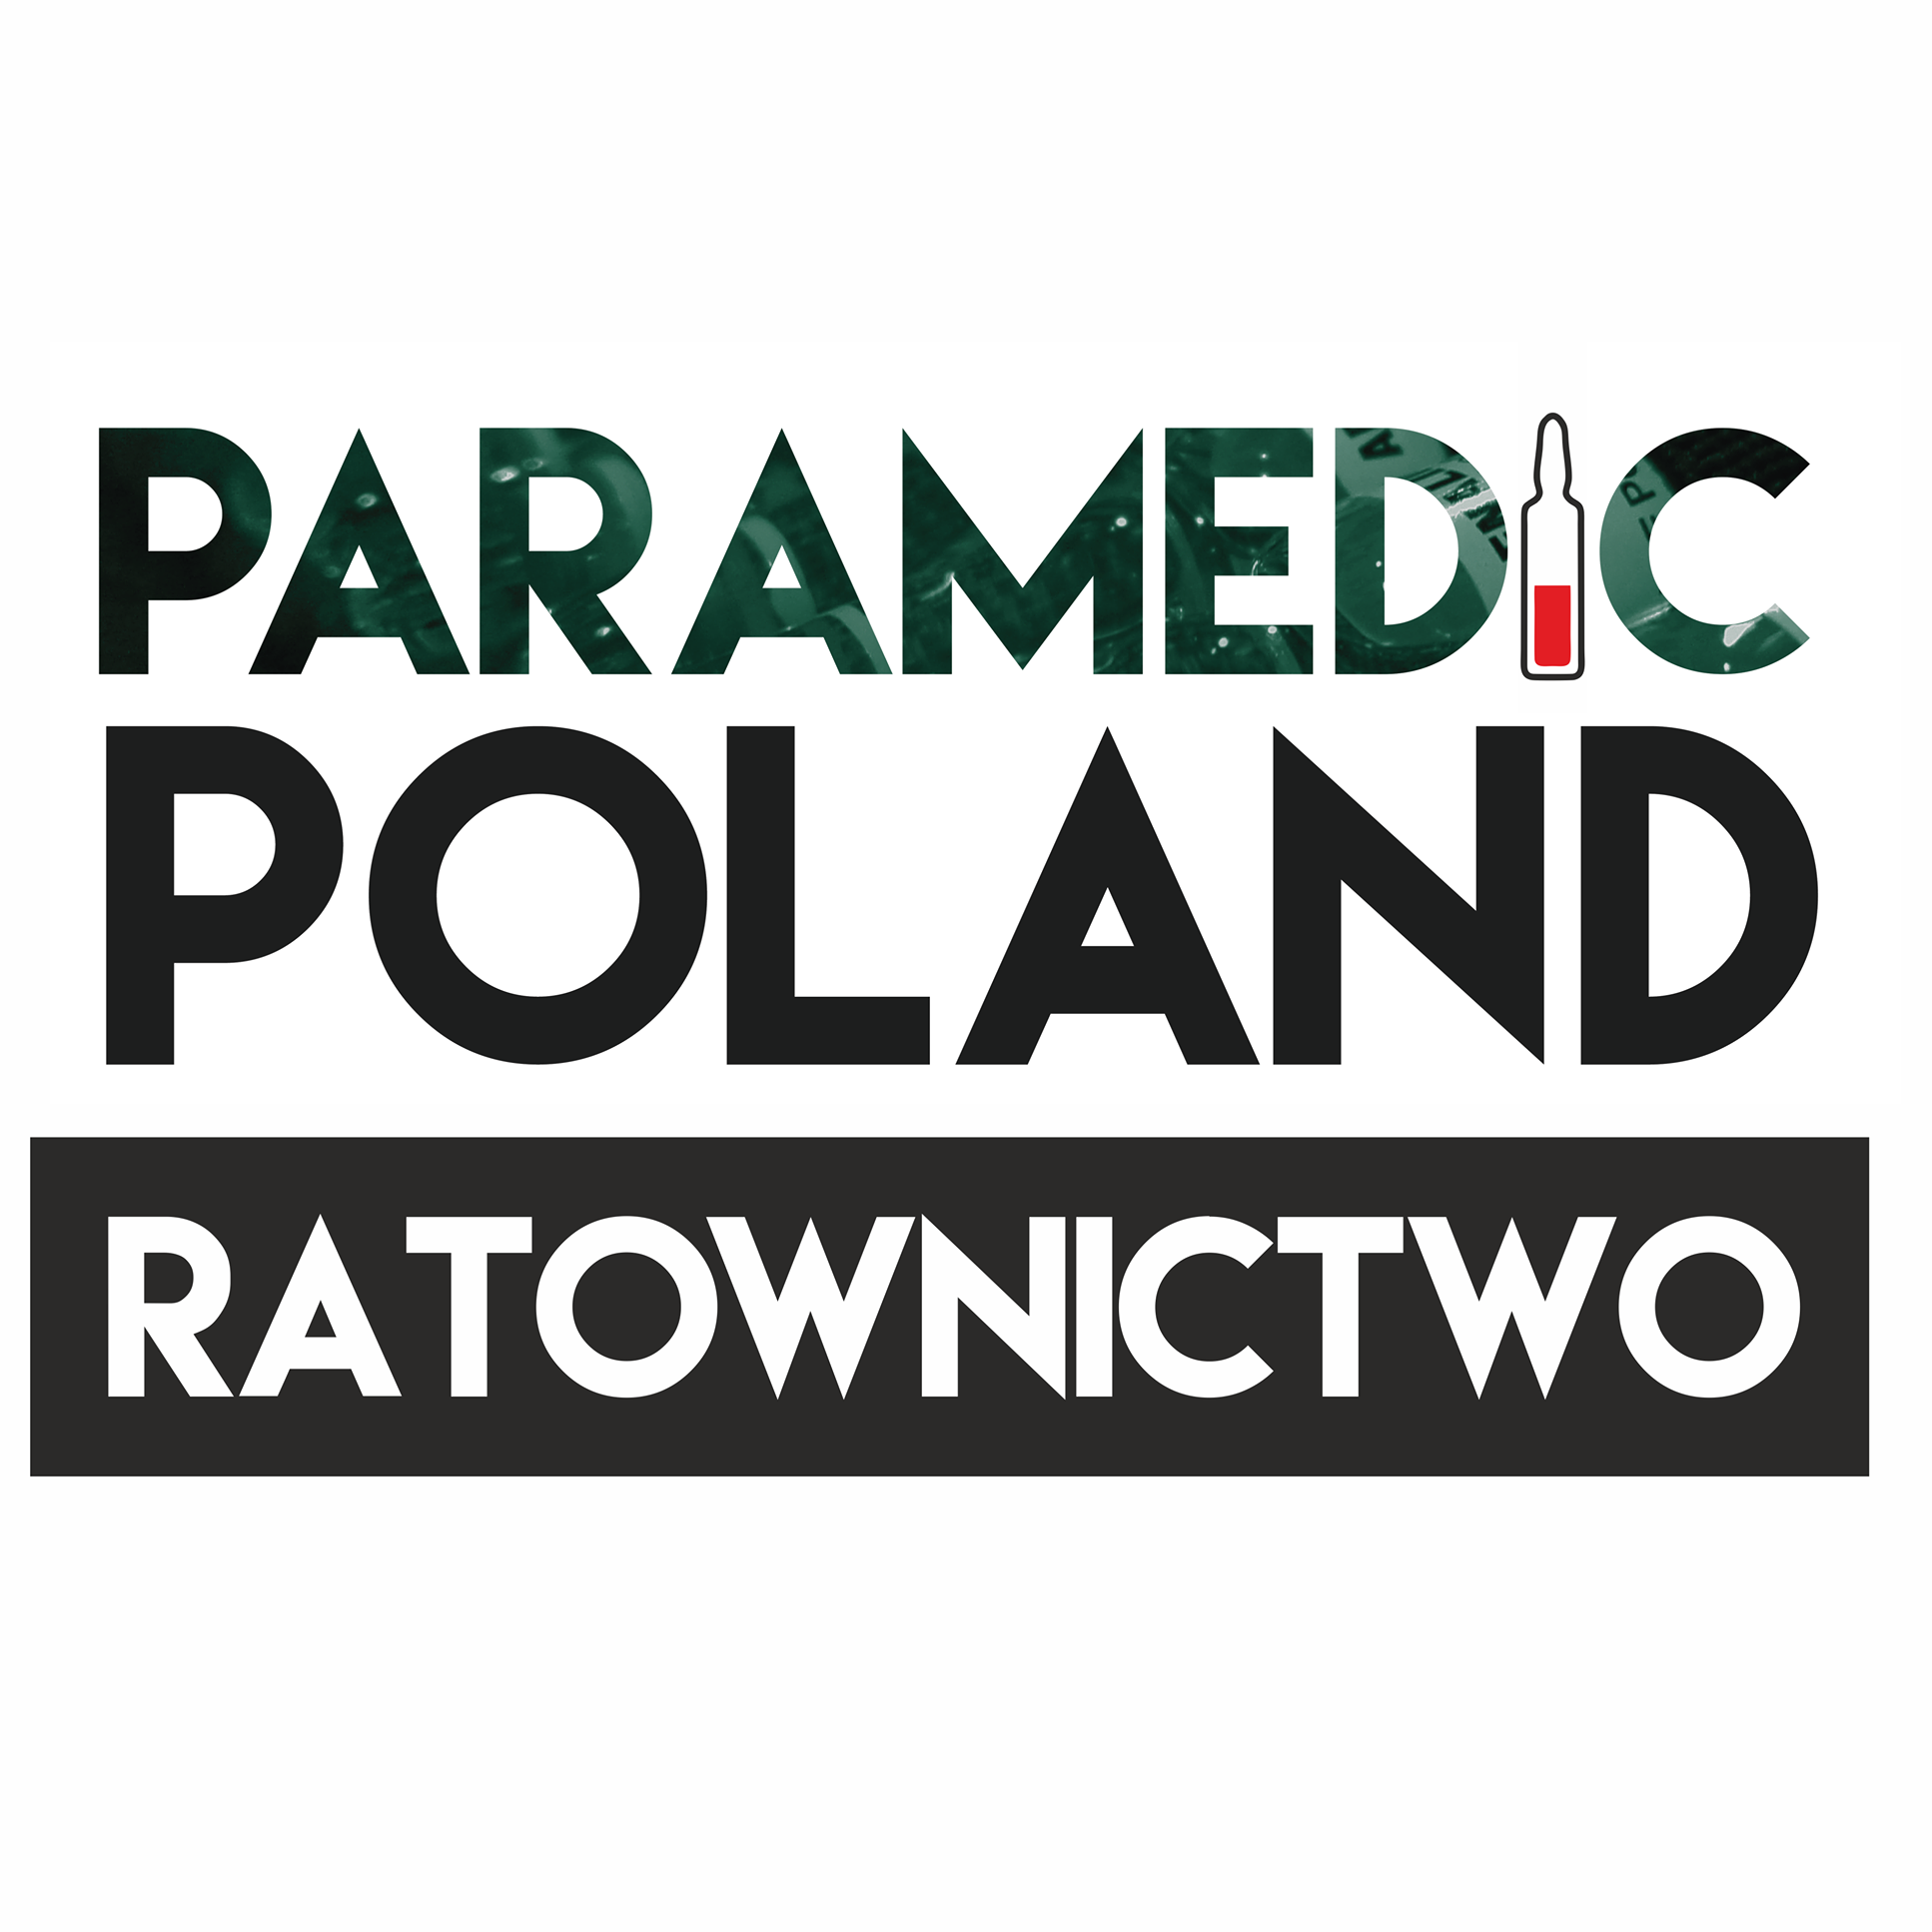 Paramedic Poland Ratownictwo